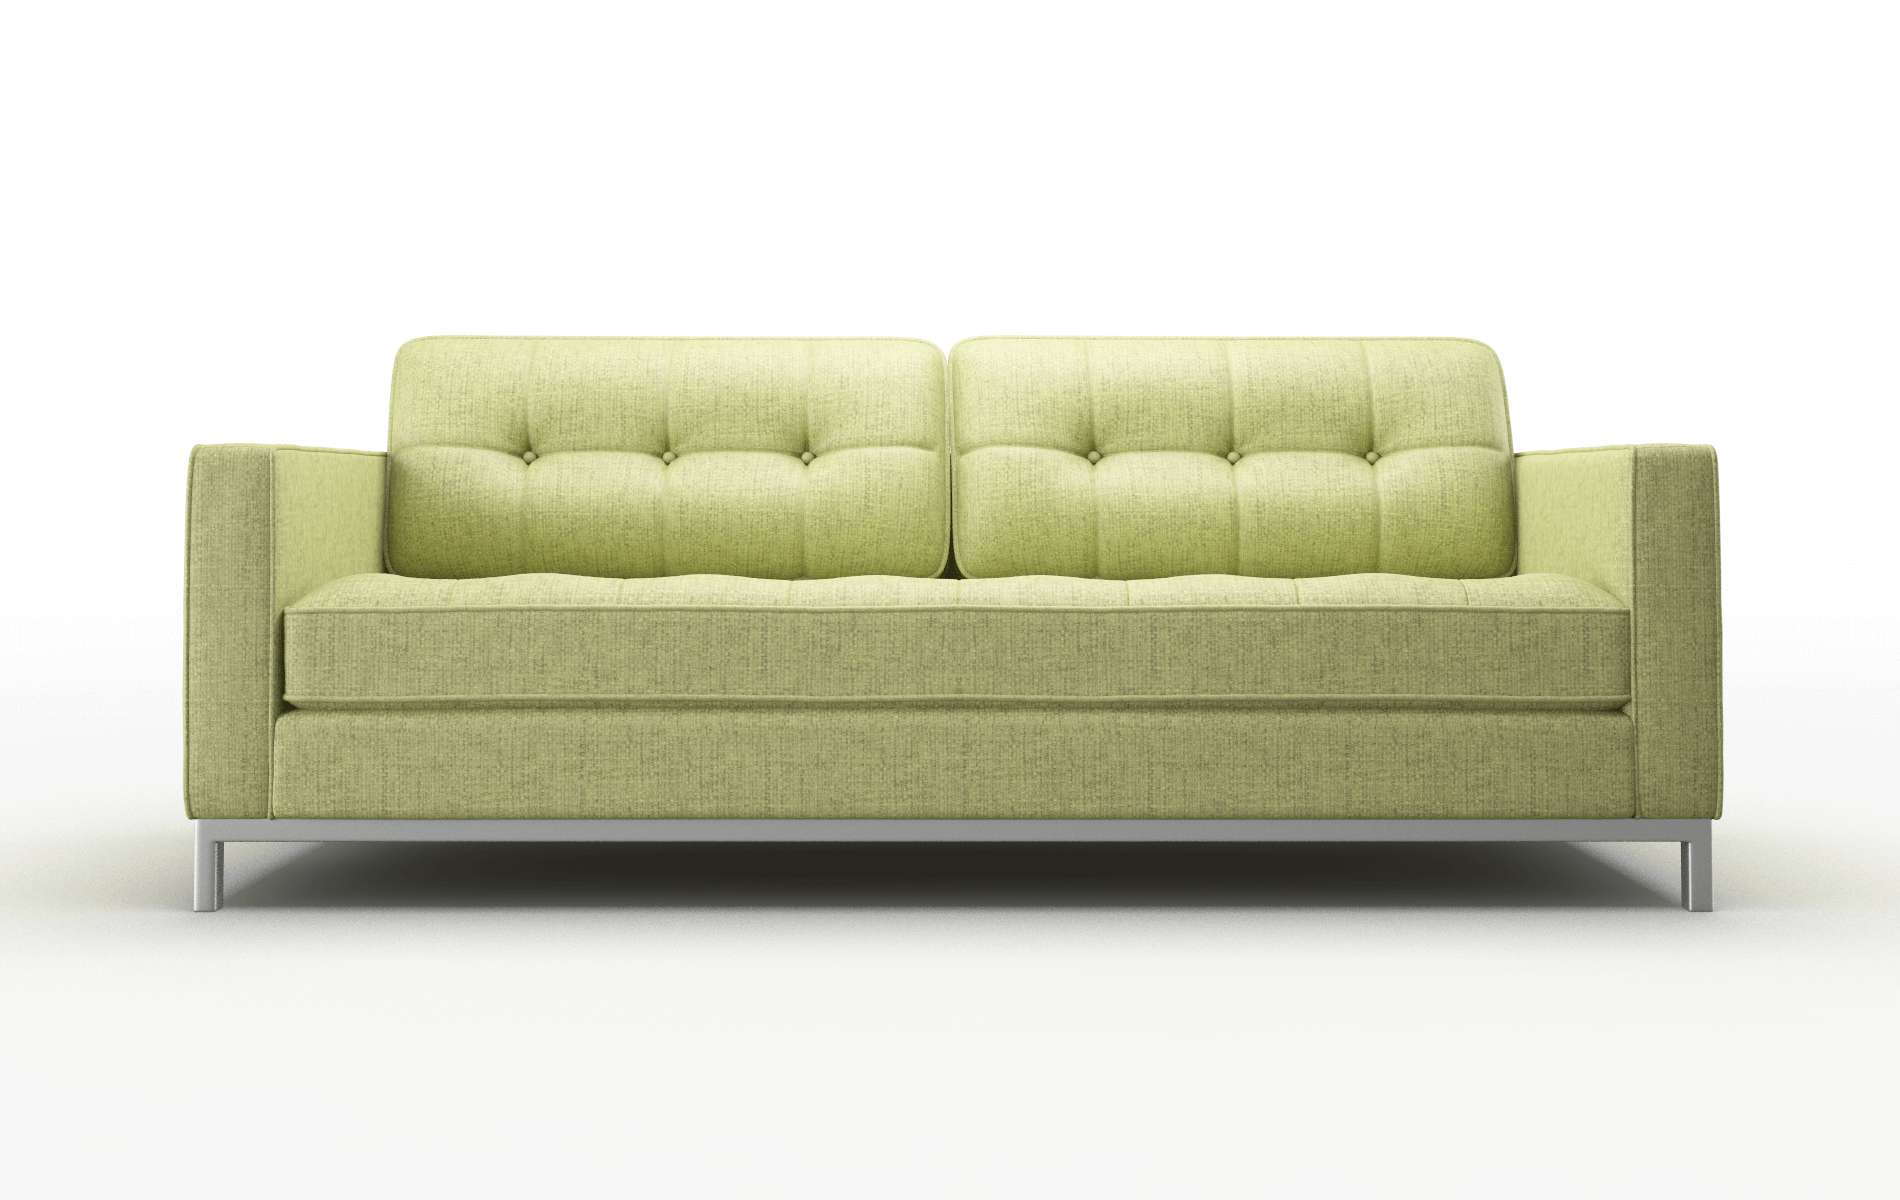 Oxford Notion Appletini Sofa metal legs